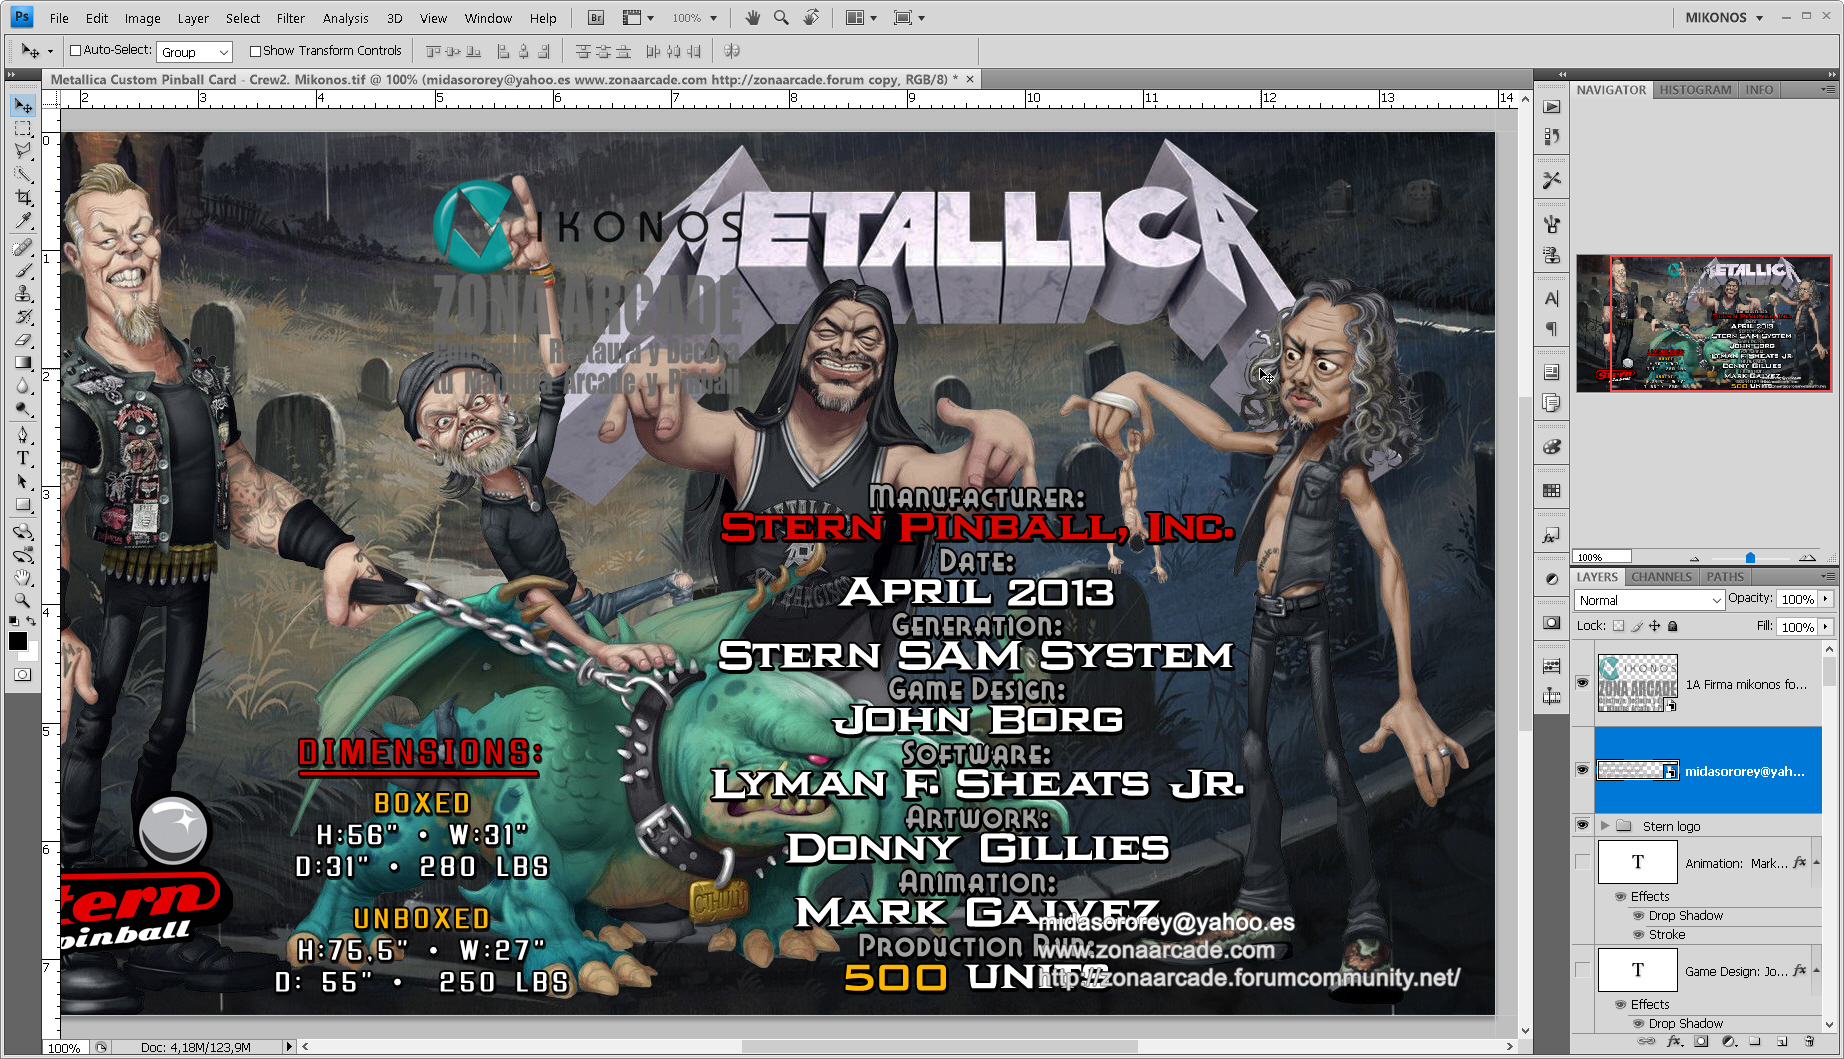 Metallica%20Custom%20Pinball%20Card%20-%20Crew2.%20Mikonos2